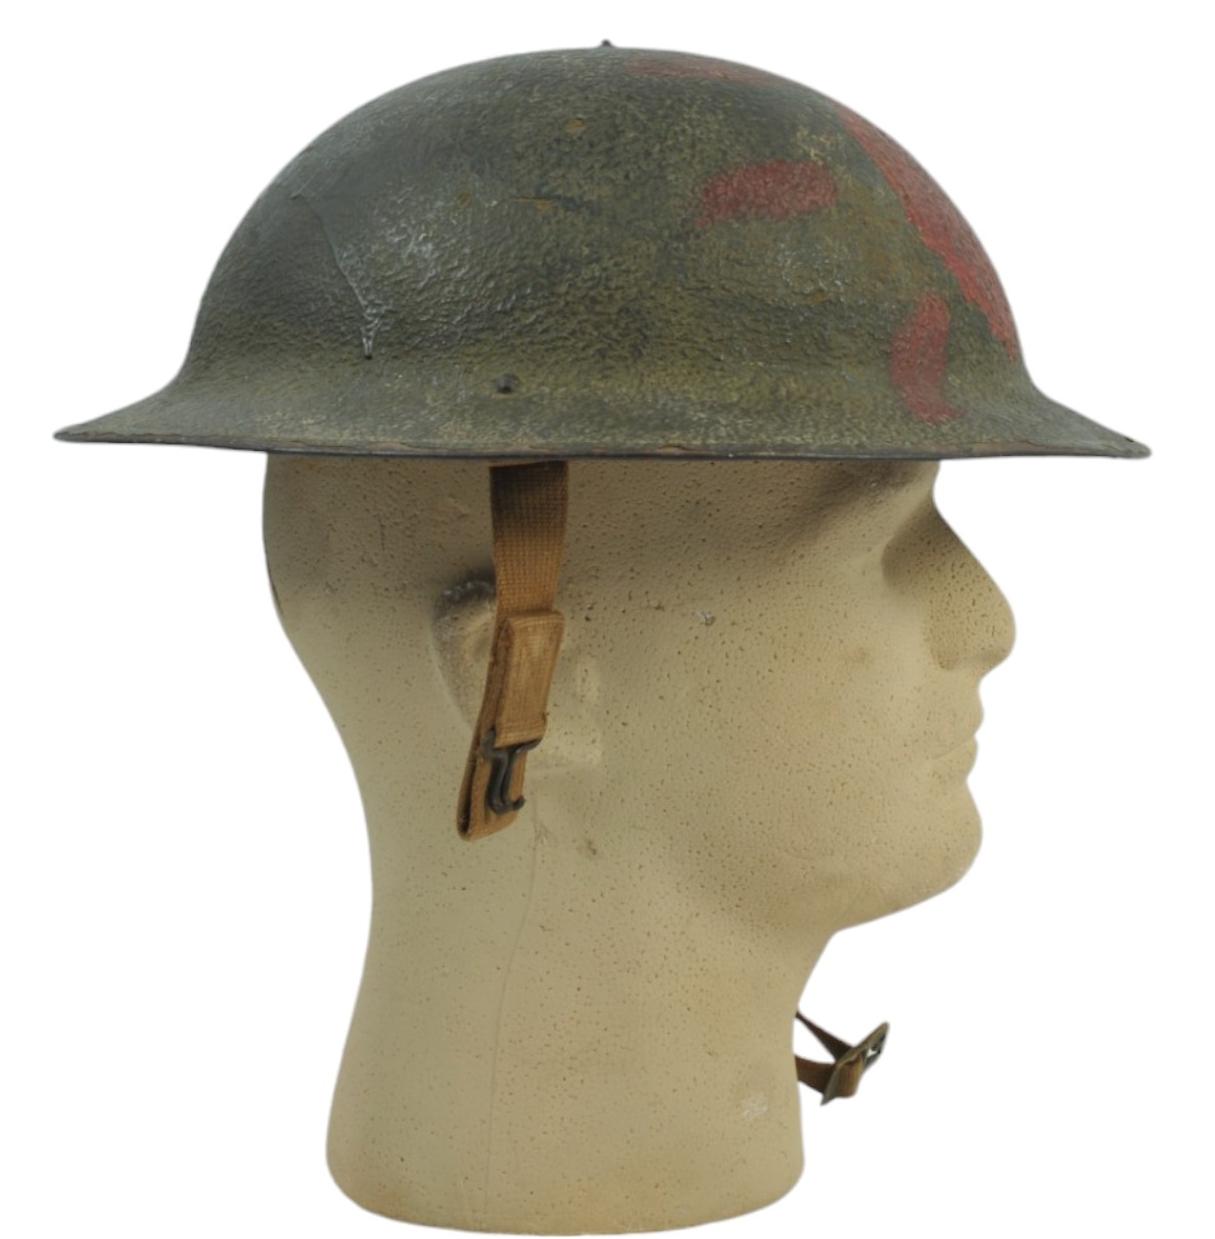 WWII Era British Helmet with Painted Decoration (JMT)